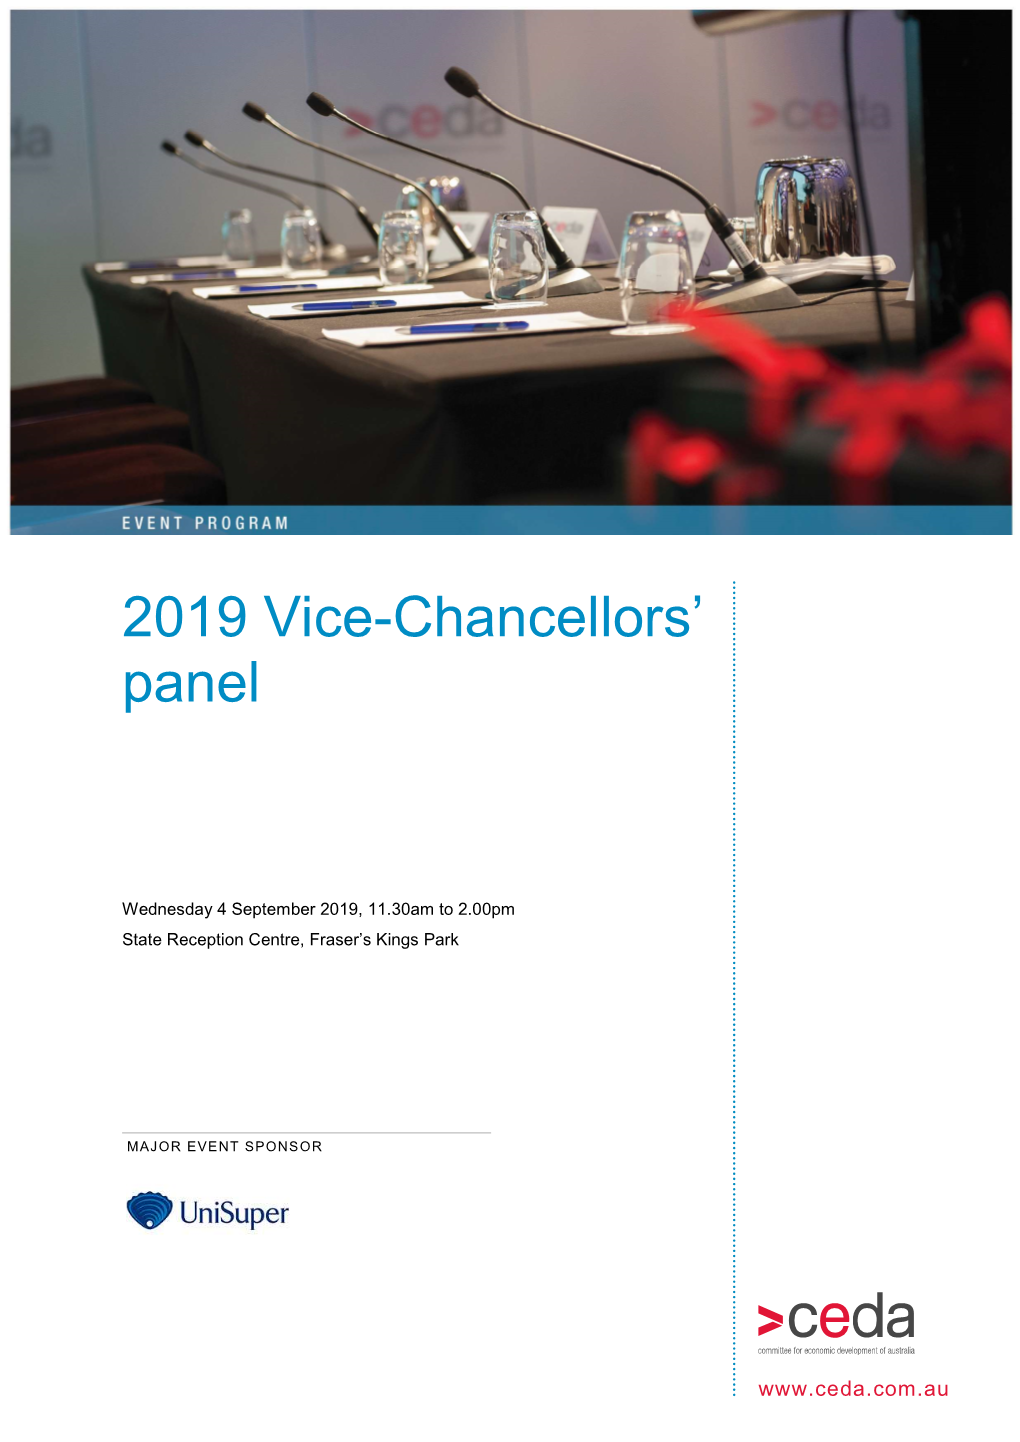 2019 Vice-Chancellors' Panel